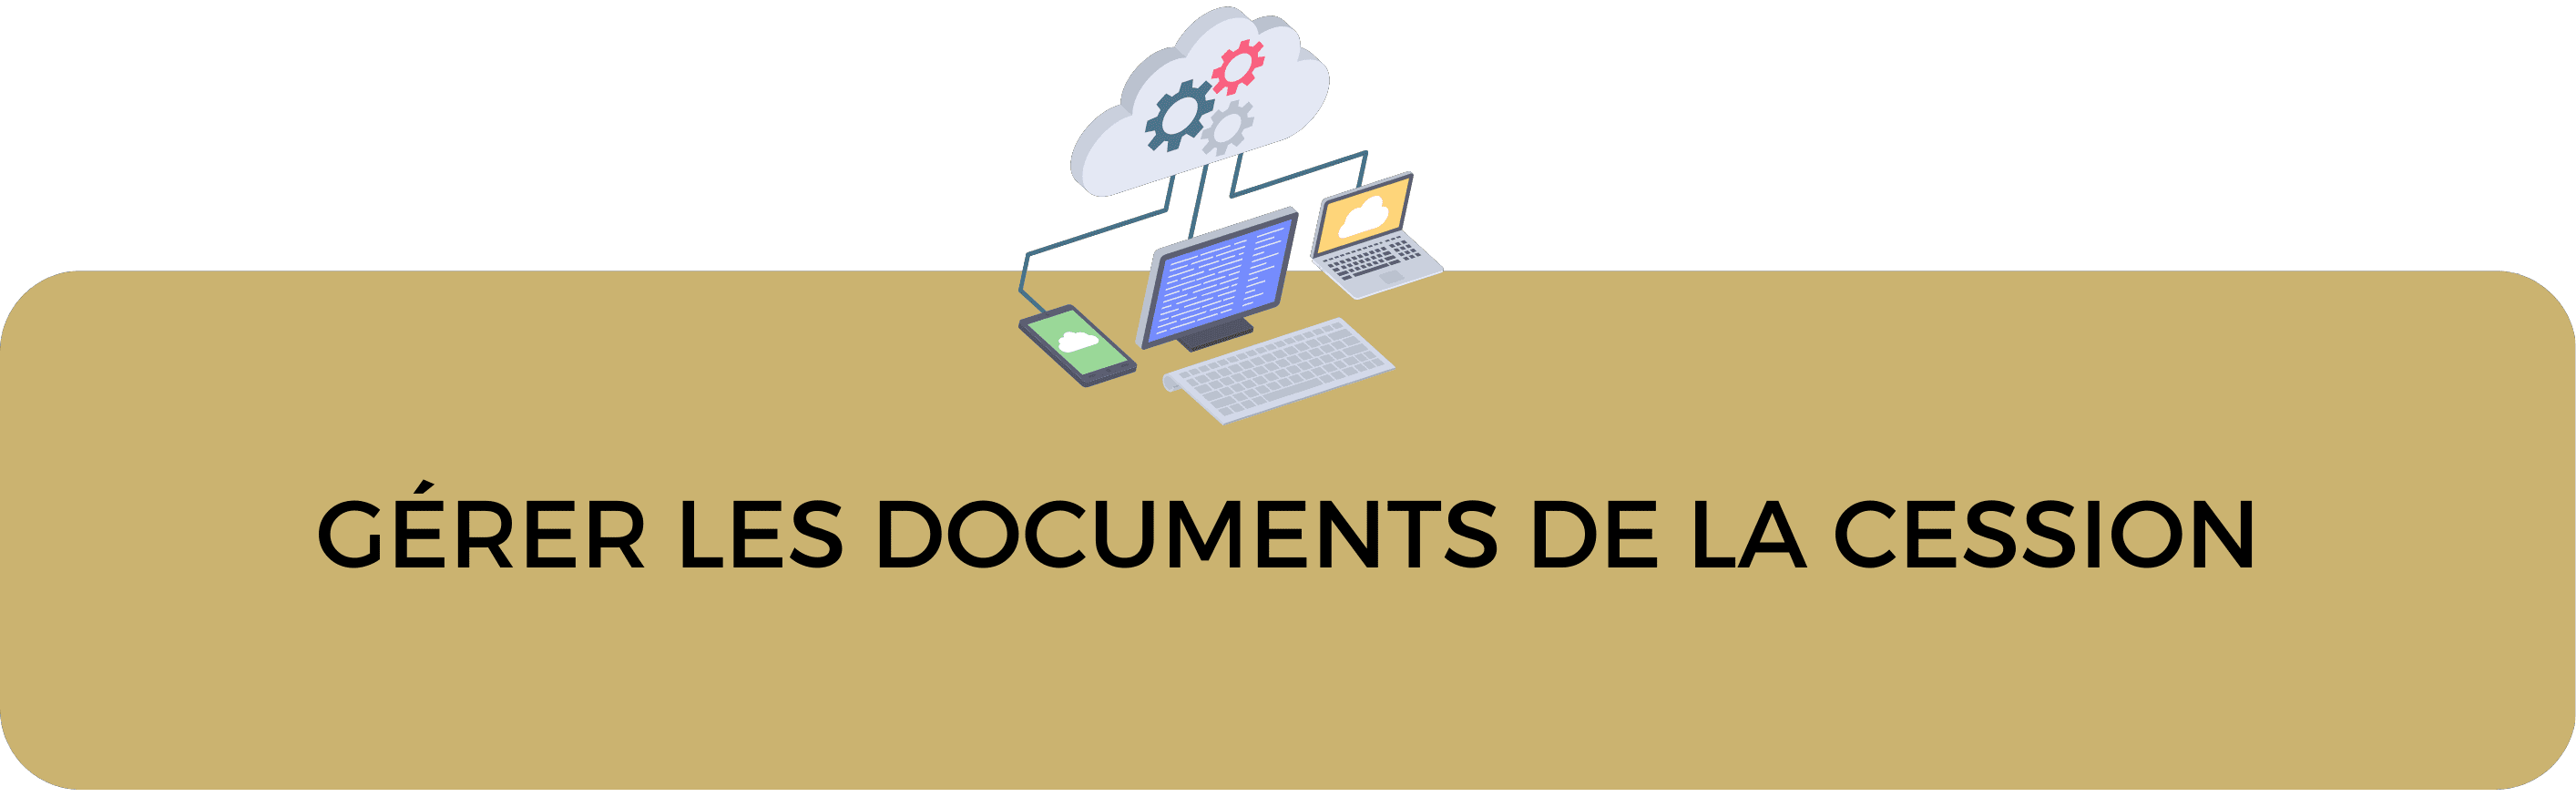 numeriser_gerer_documents_vente_commerce